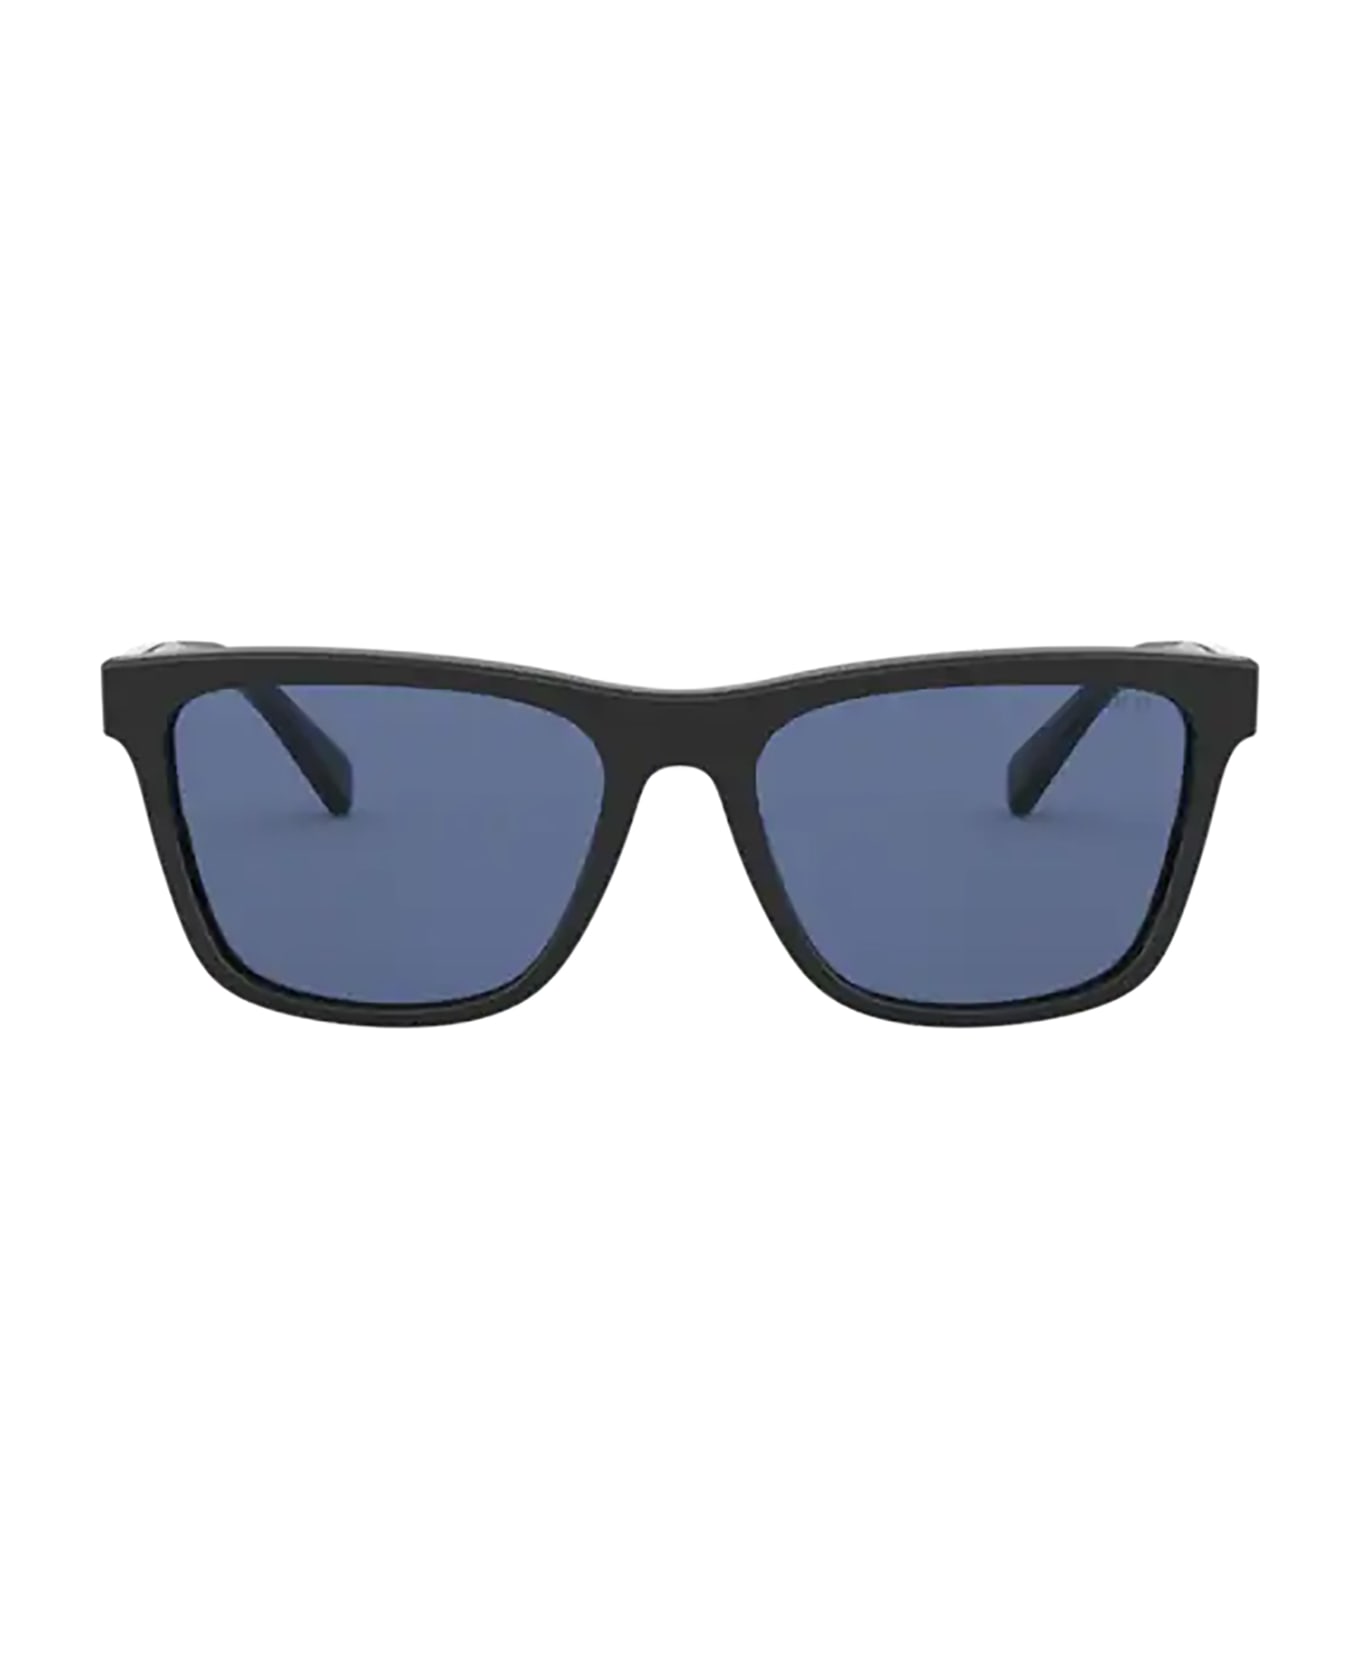 Polo Ralph Lauren Ph4167 Shiny Black Sunglasses - SHINY BLACK